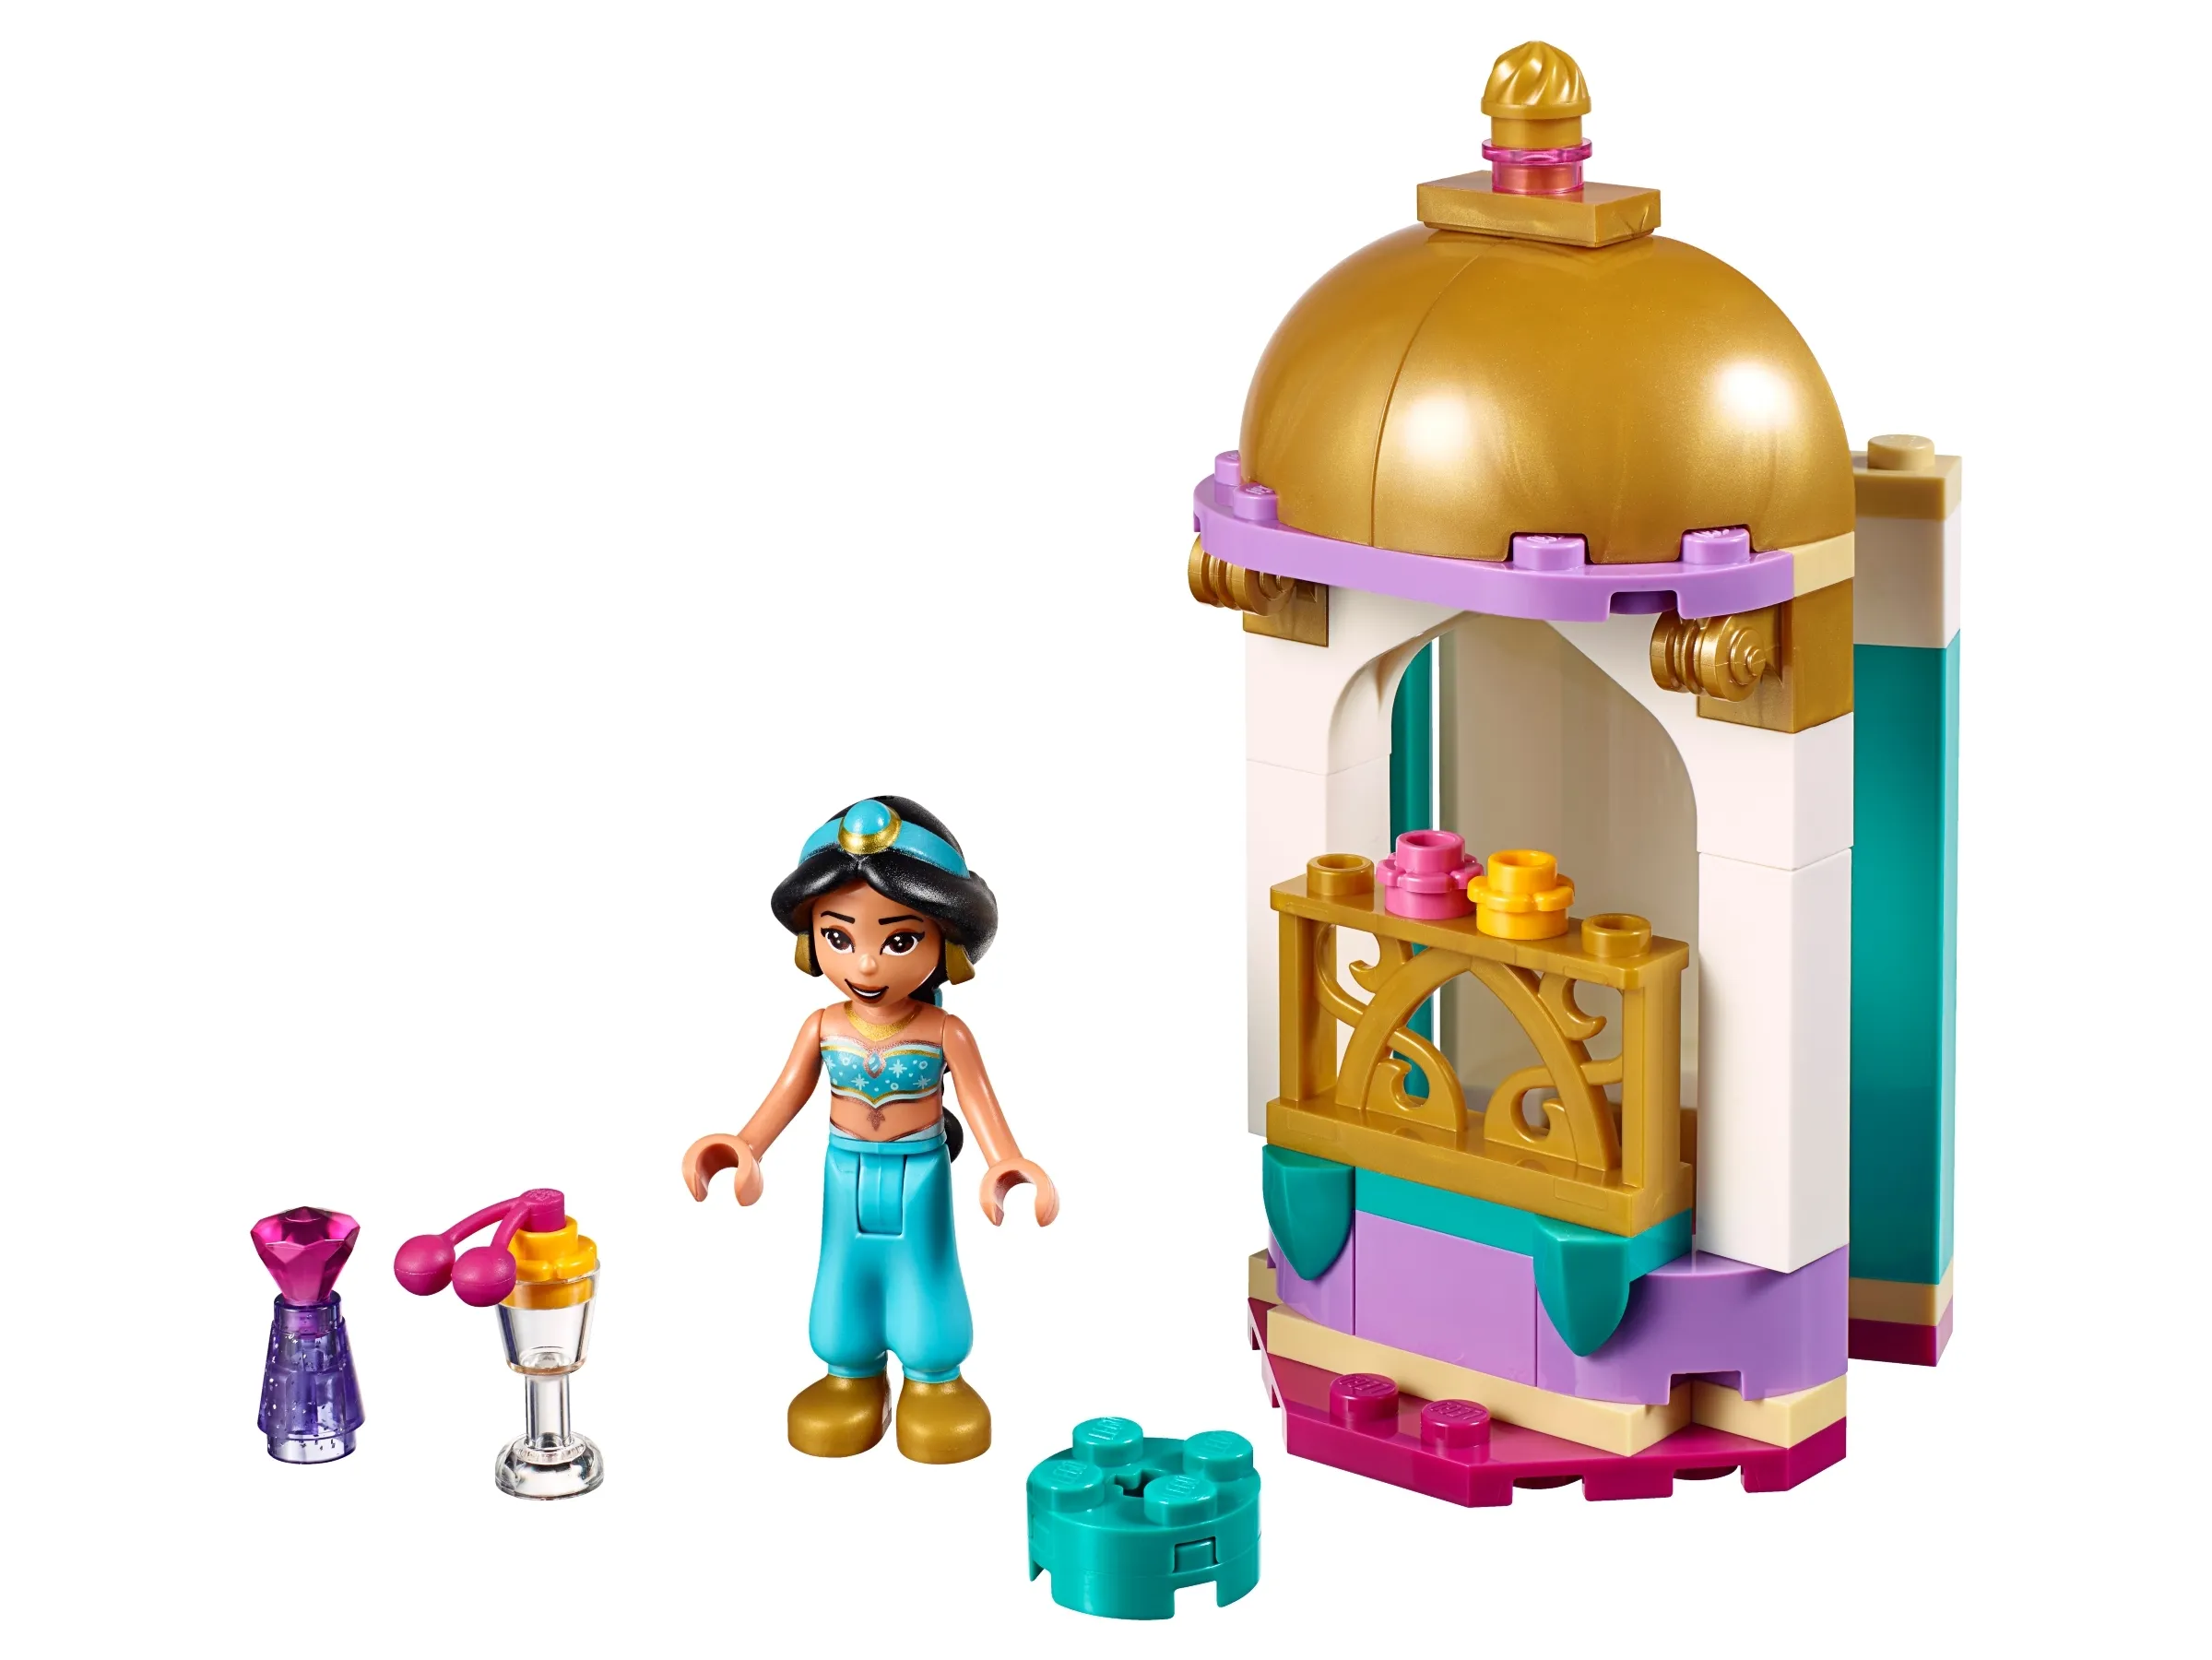 LEGO Disney Jasmine's Petite Tower • Set 41158 • SetDB